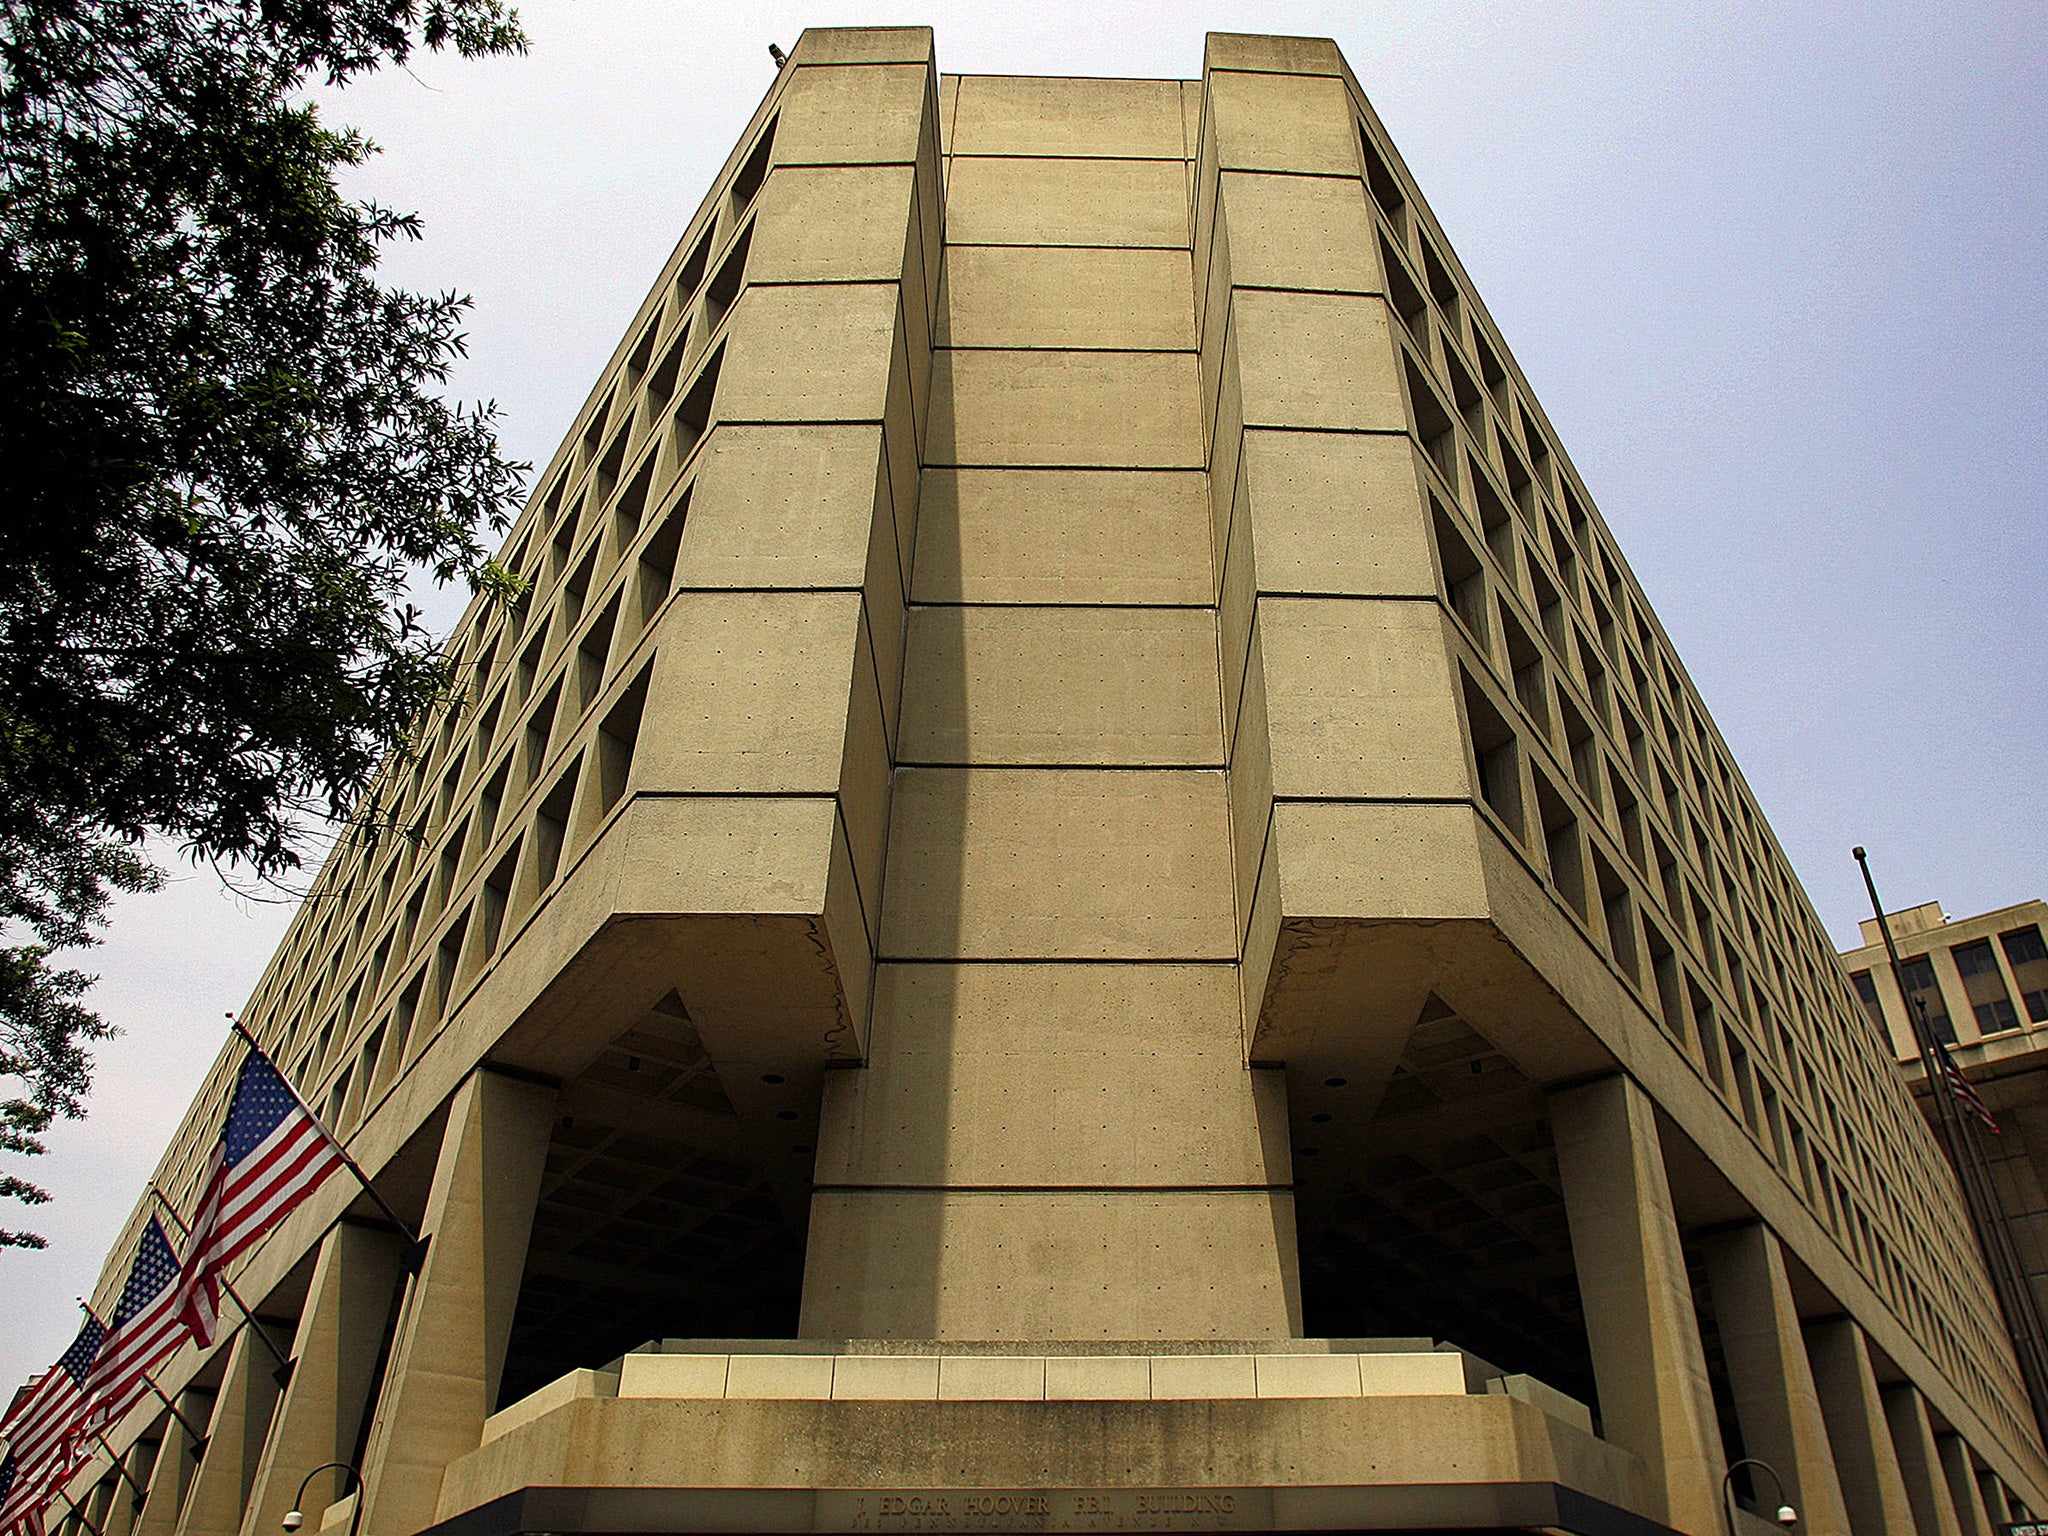 The J. Edgar Hoover FBI building in Washington, DC